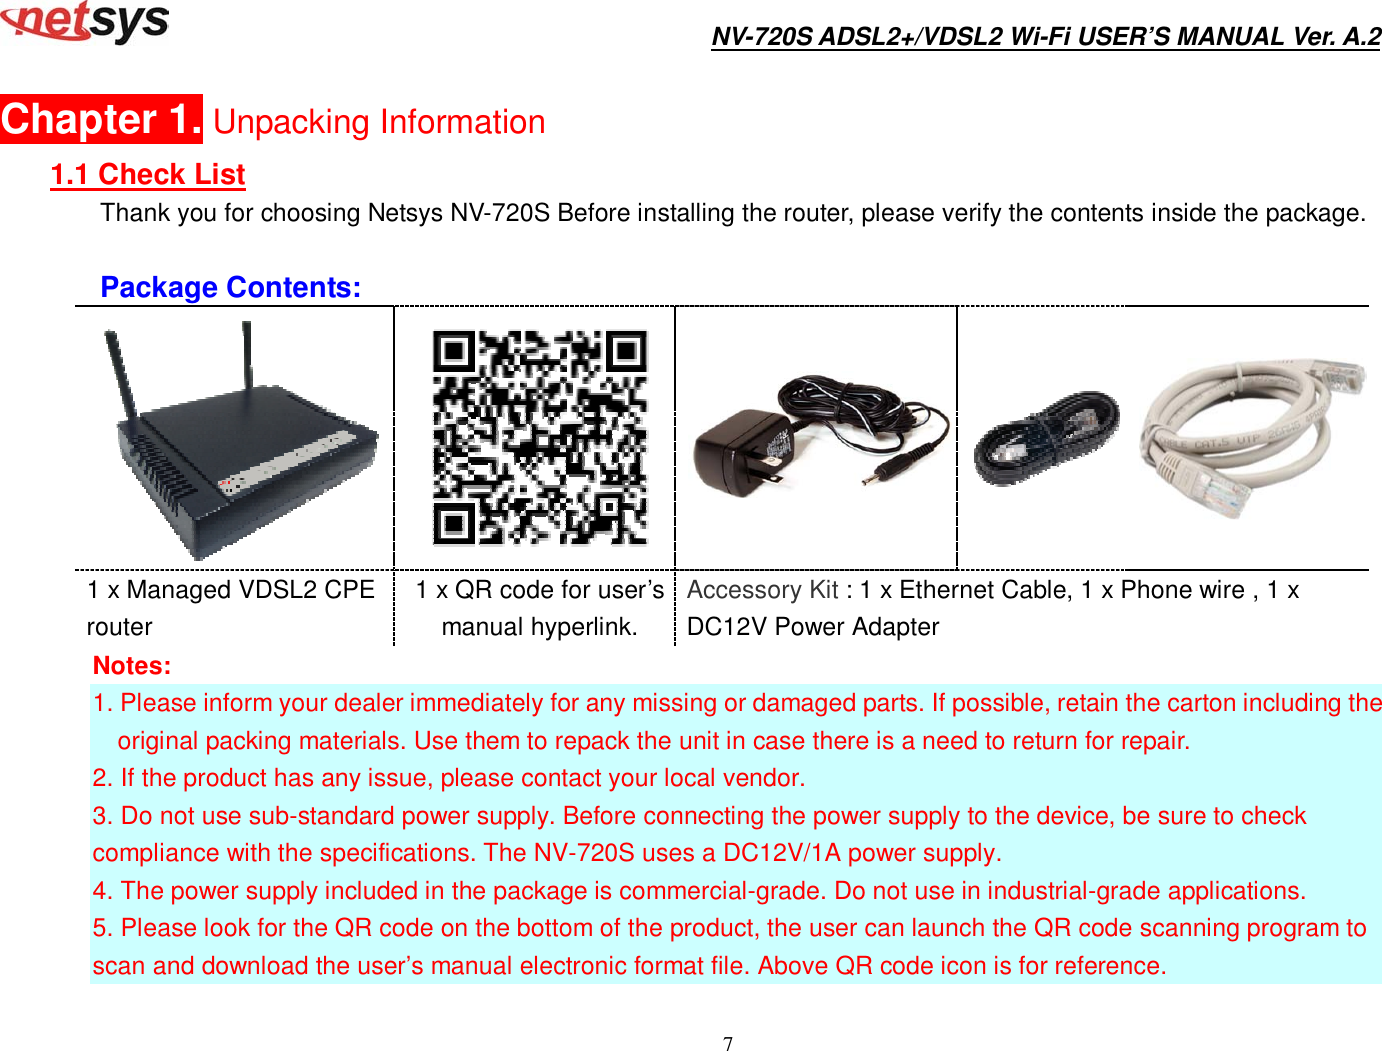 Page 8 of National Enhance Technology NV720XX ADSL2+/VDSL2 Wi-Fi Modem Router User Manual NV 720S User s Manual Ver A2